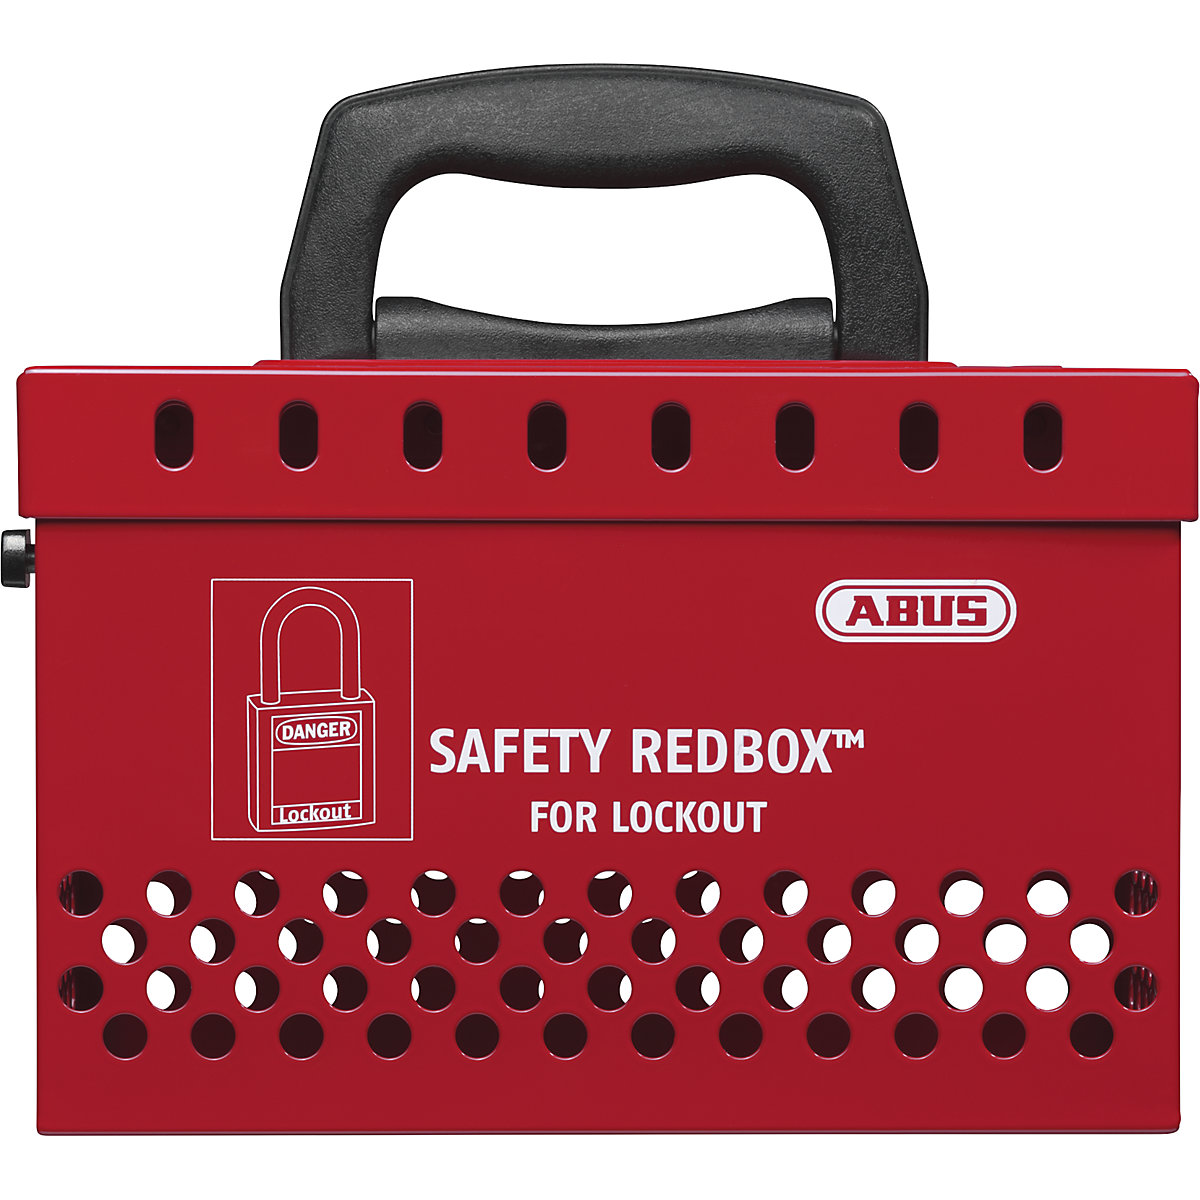 Safety Redbox B835 – ABUS